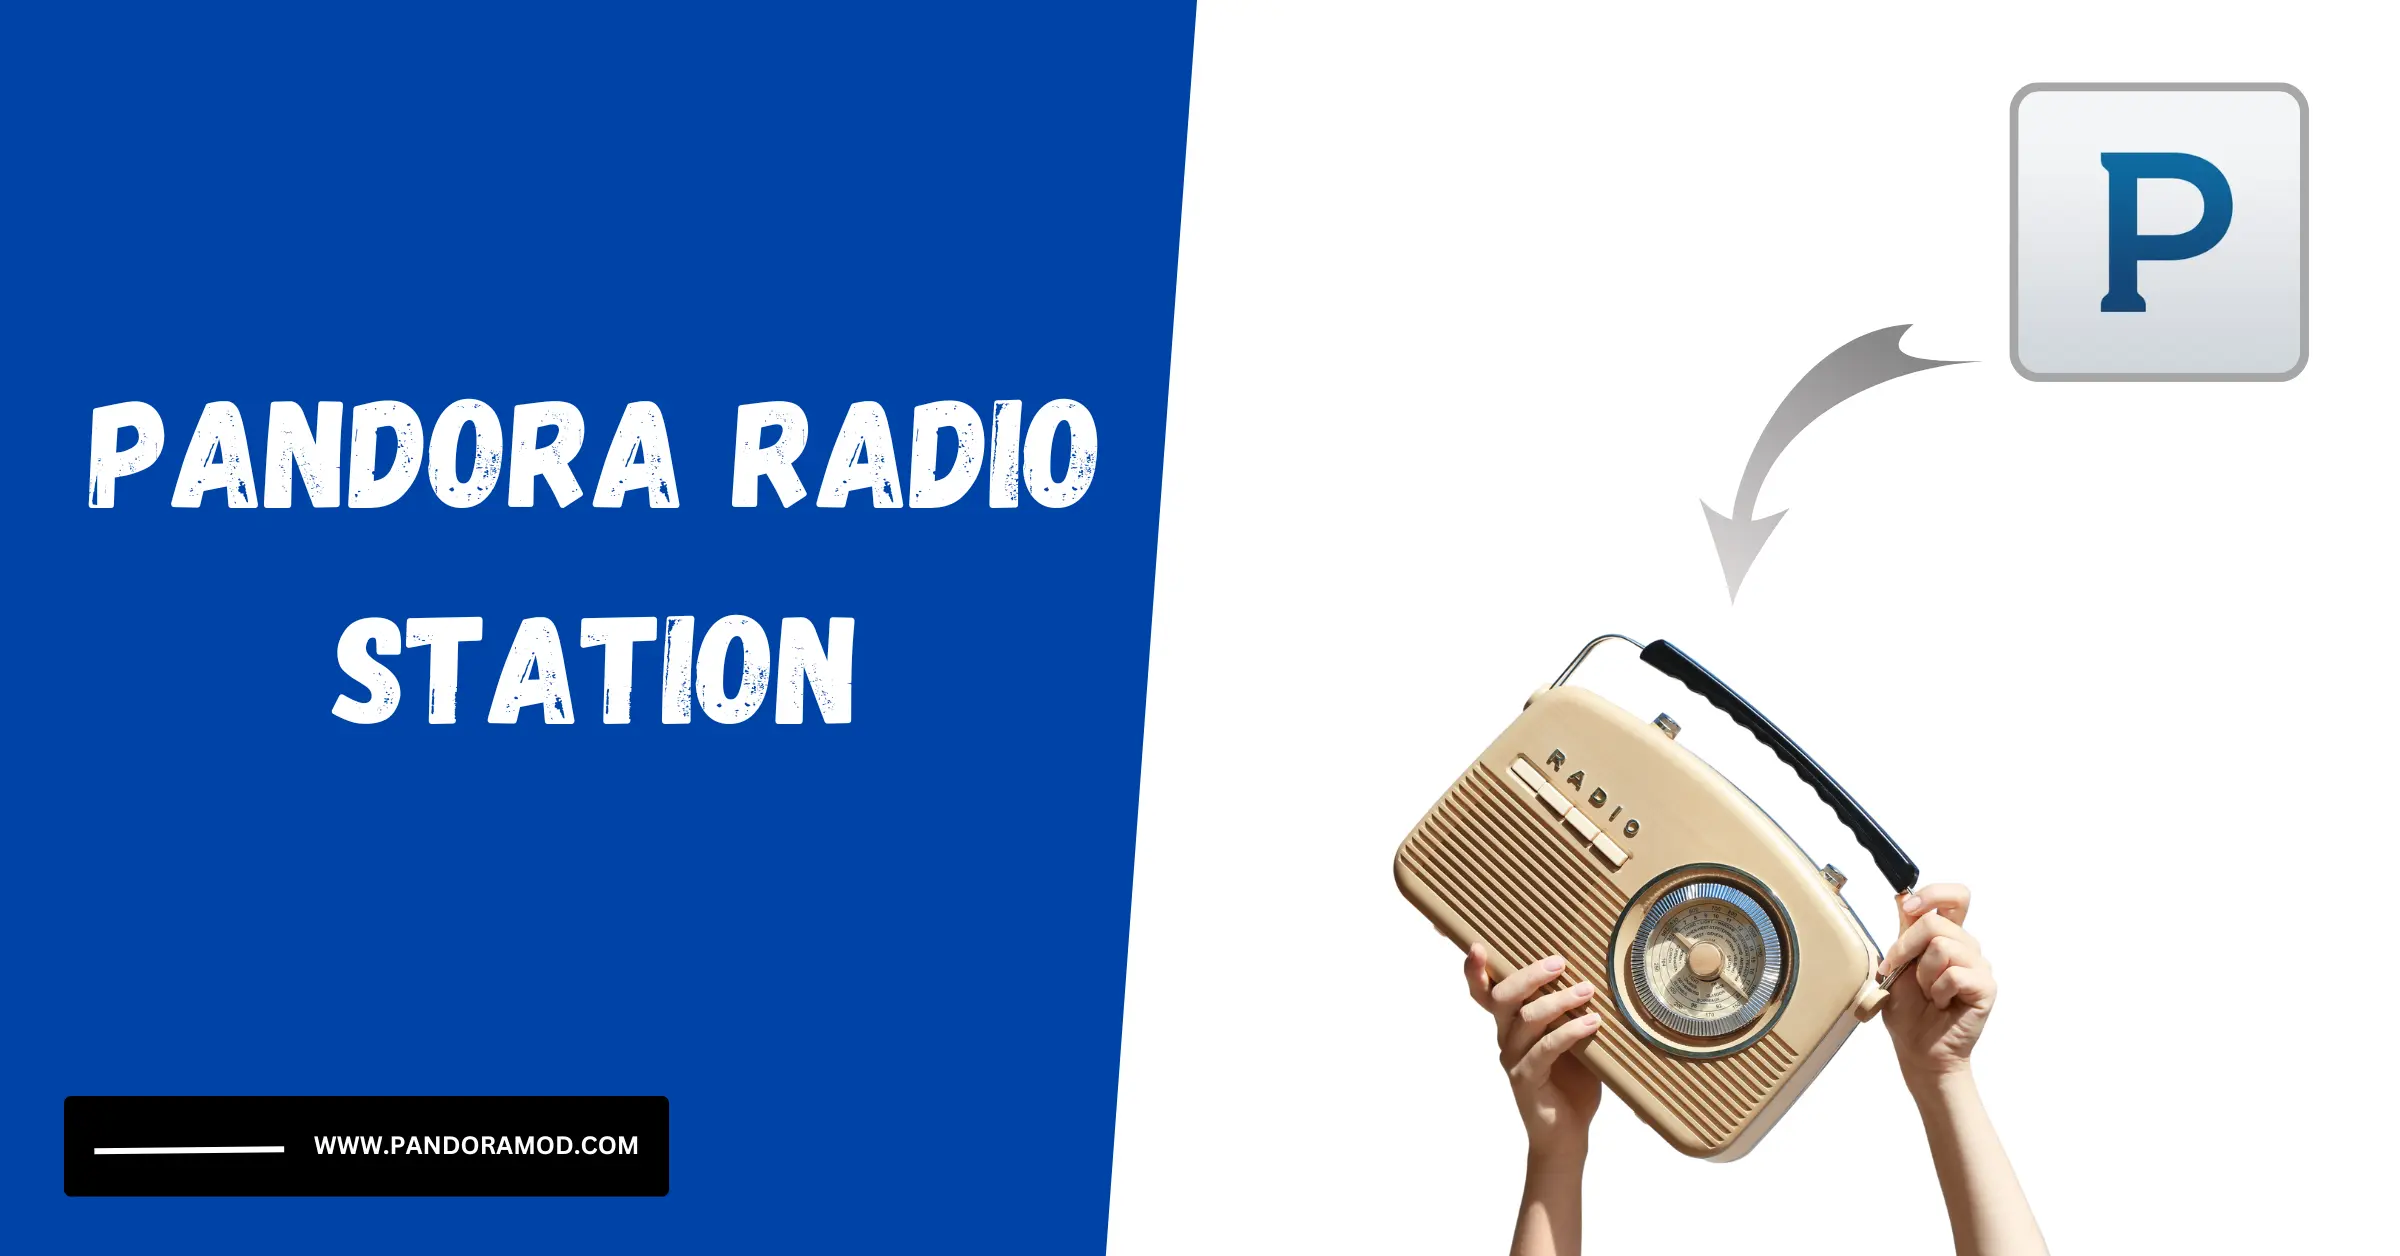 Pandora Radio Station